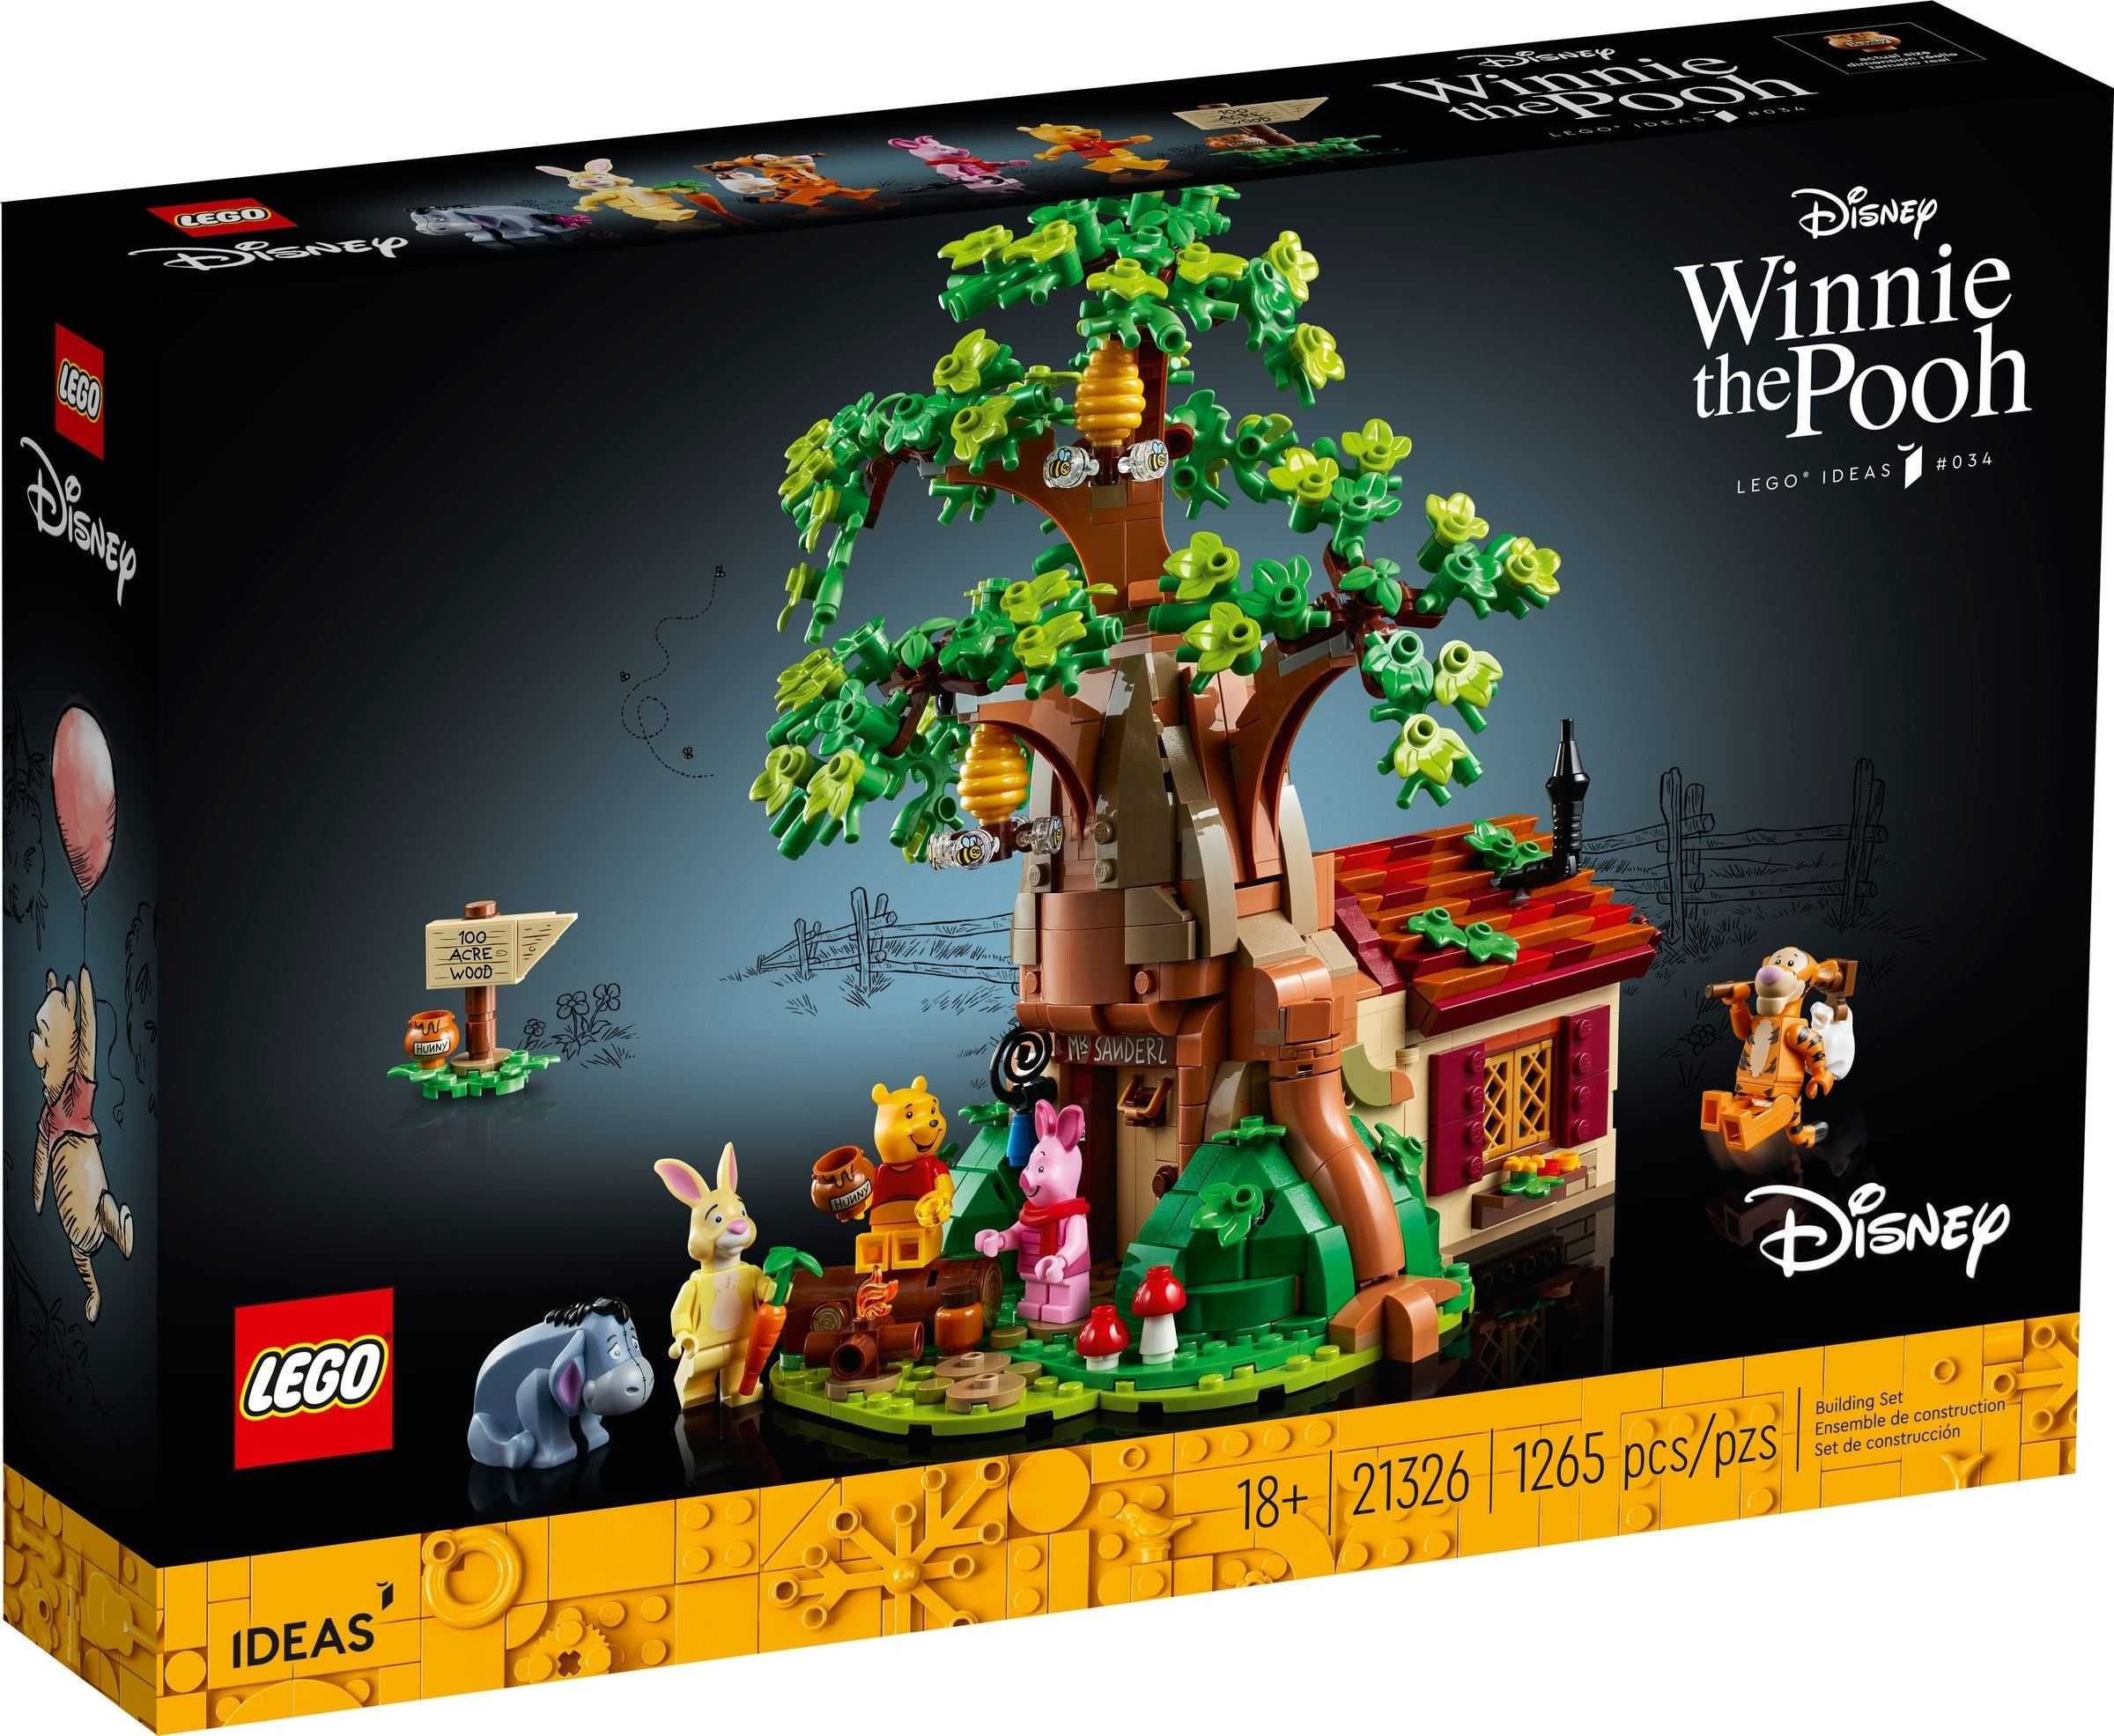 LEGO Ideas 21326: Winnie the Pooh - NOU